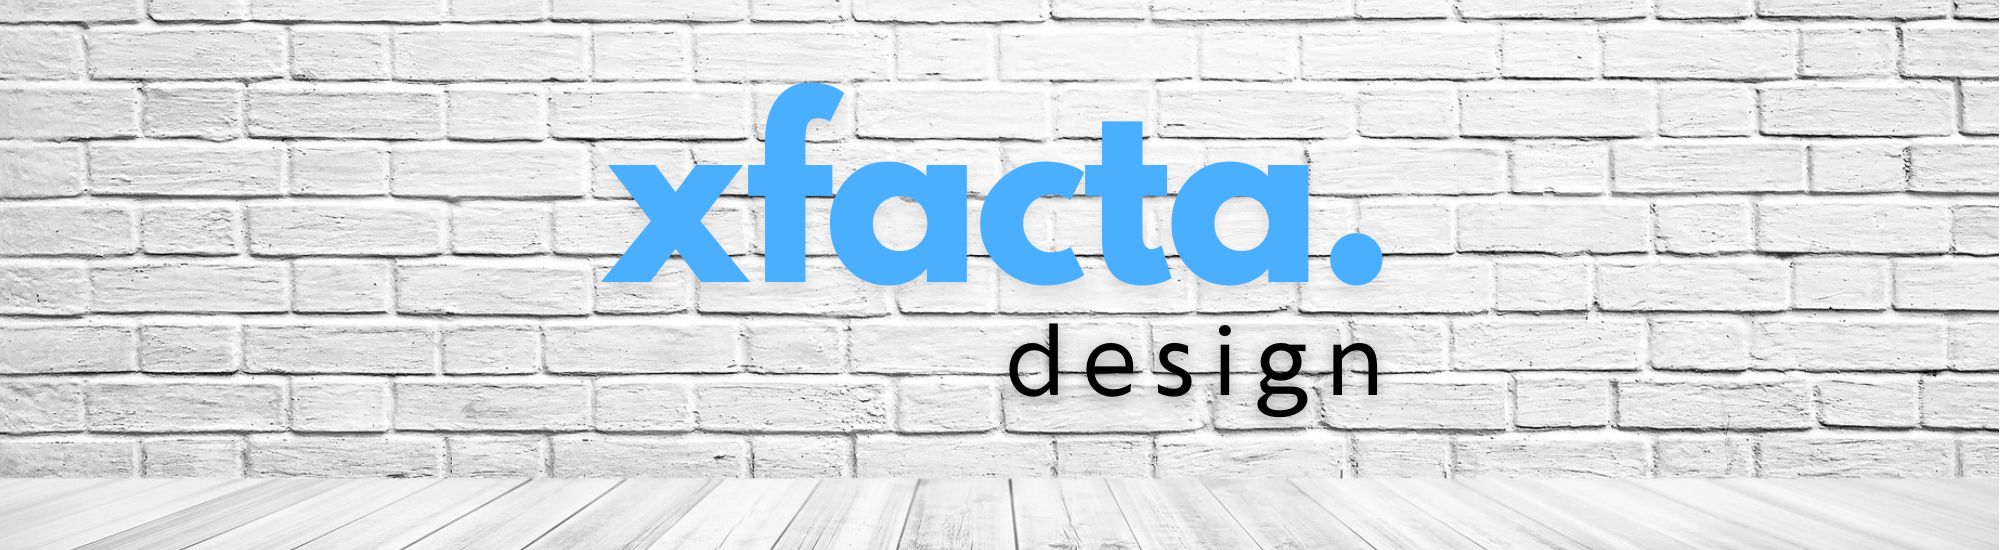 Xfacta Design | Sydney-based in graphic design, web design, digital marketing, SEO, and email marketing